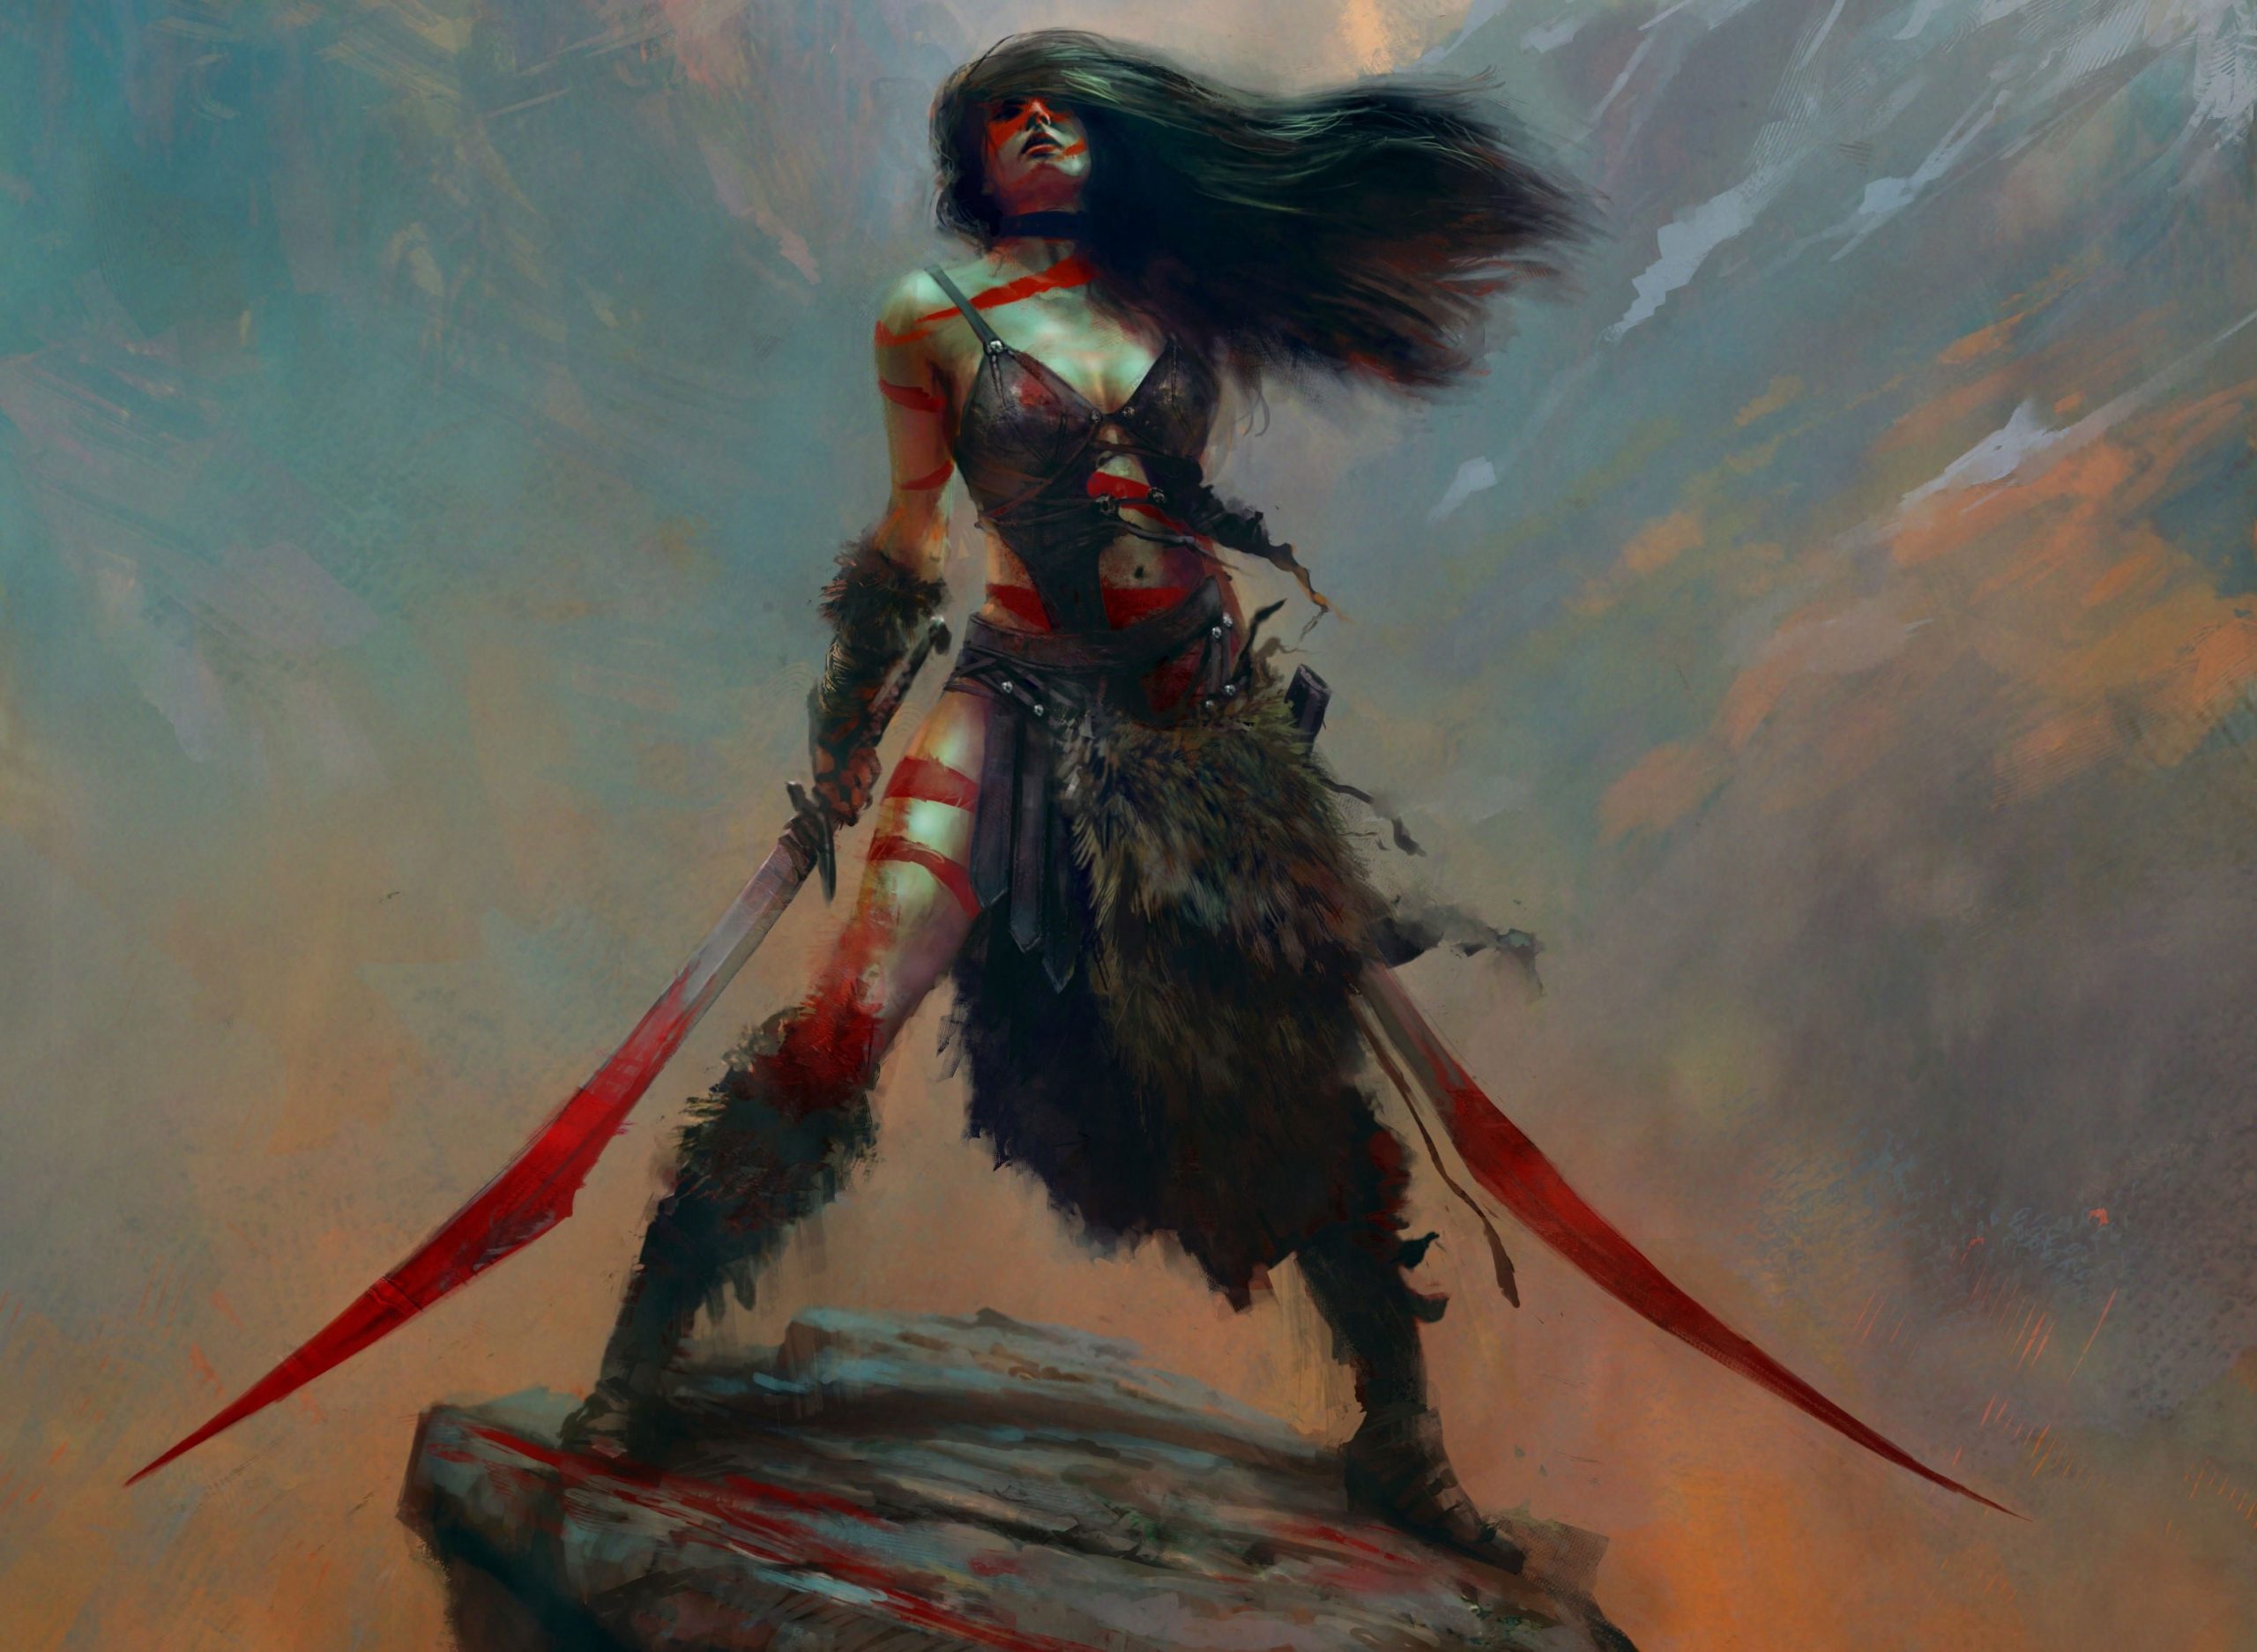 Female character holding two swords painting, artwork, fantasy art wallpaper